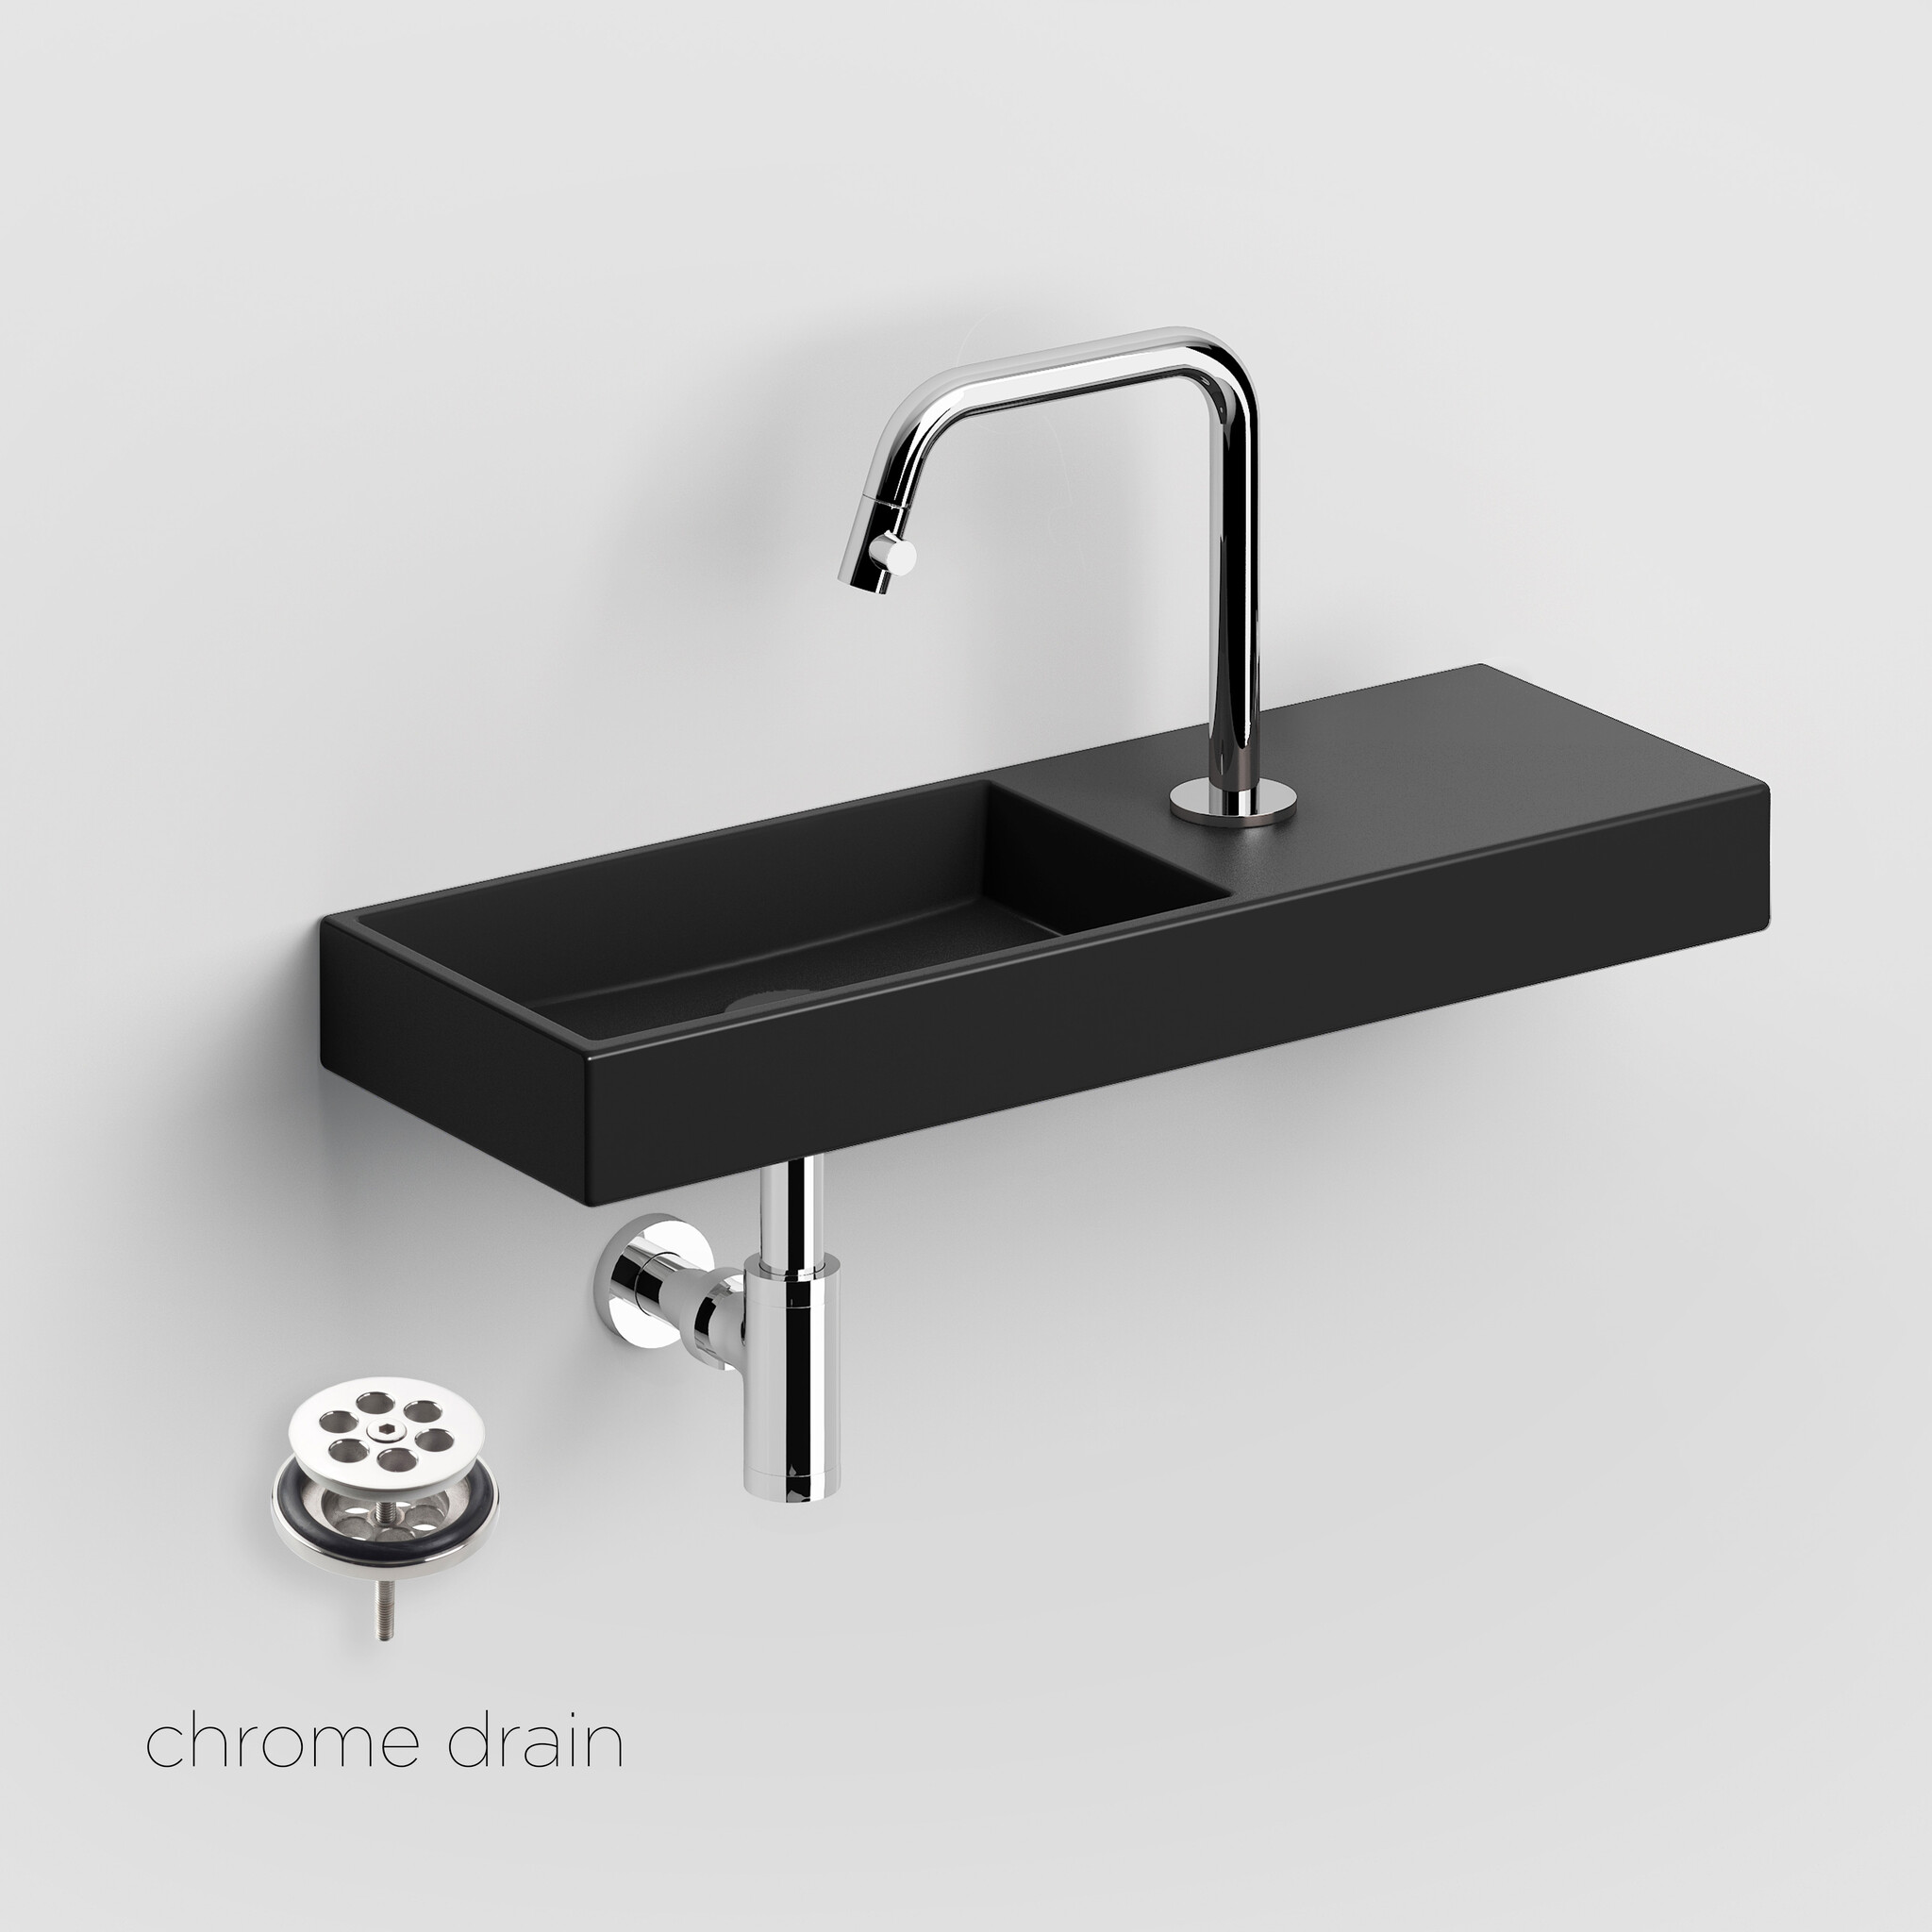 One-Click One-Click handbasin set (Mini Wash Me handbasin, Kaldur, MiniSuk)